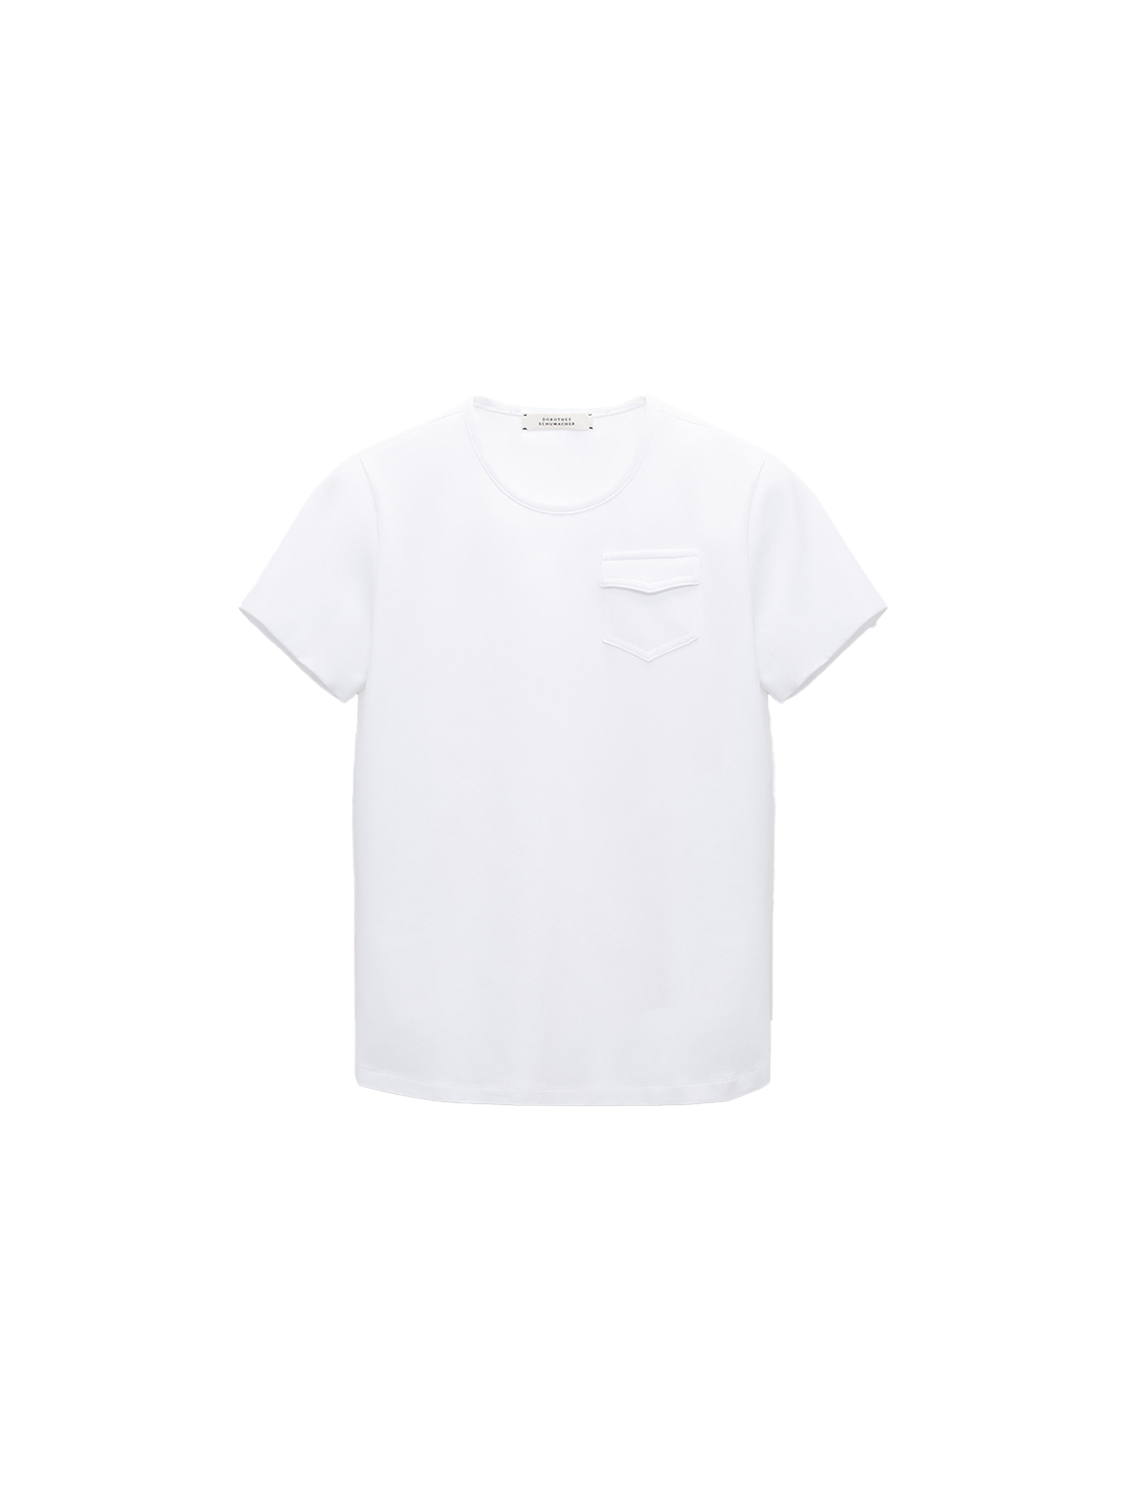 Dorothee Schumacher All Time Favorite – Stretchiges Baumwoll-Shirt   bianco XS